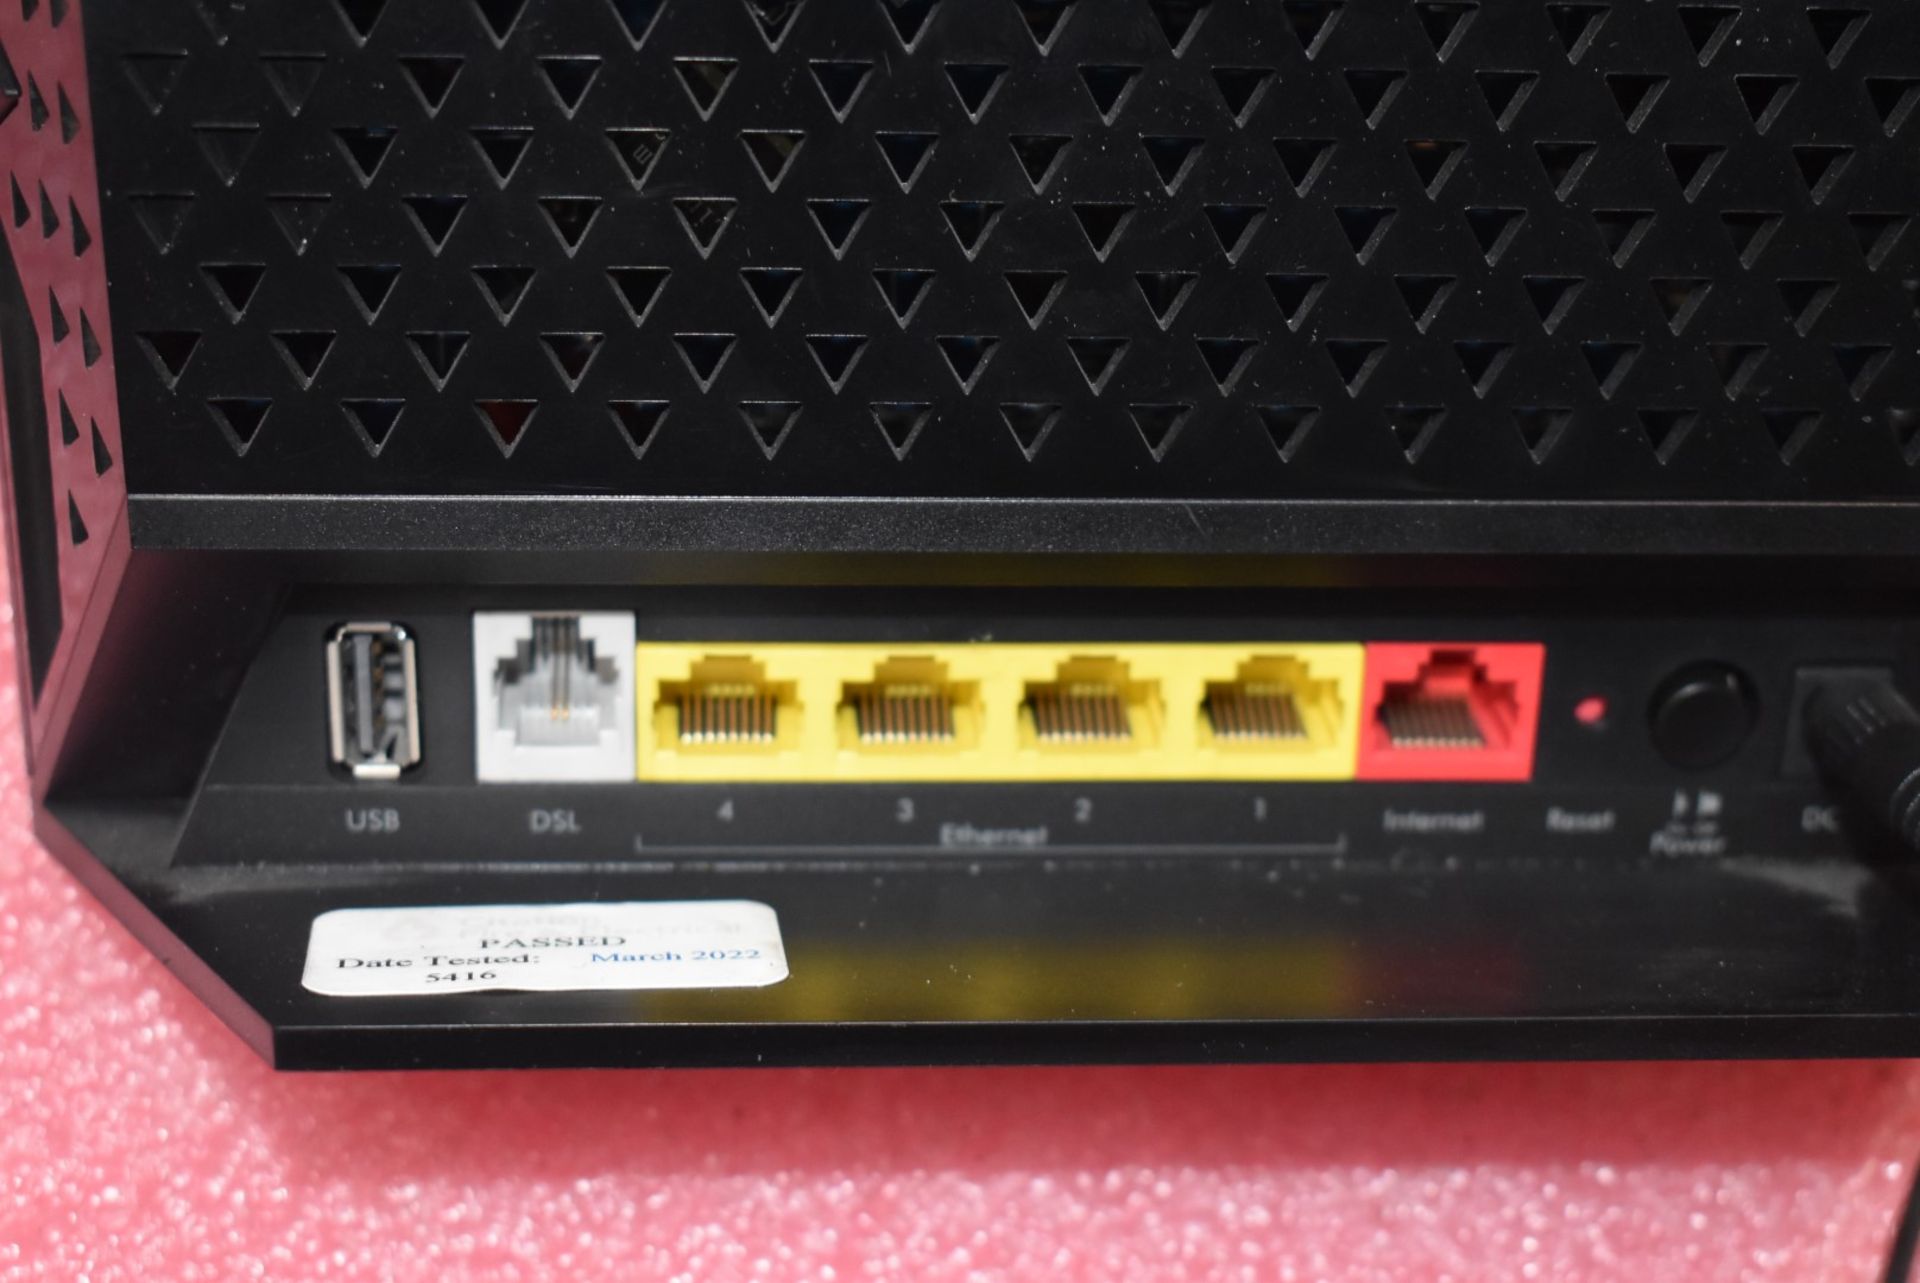 1 x Netgear D6400 AC1600 WiFi VDSL/ADSL Modem Router - Includes Power Adaptor - Image 2 of 3